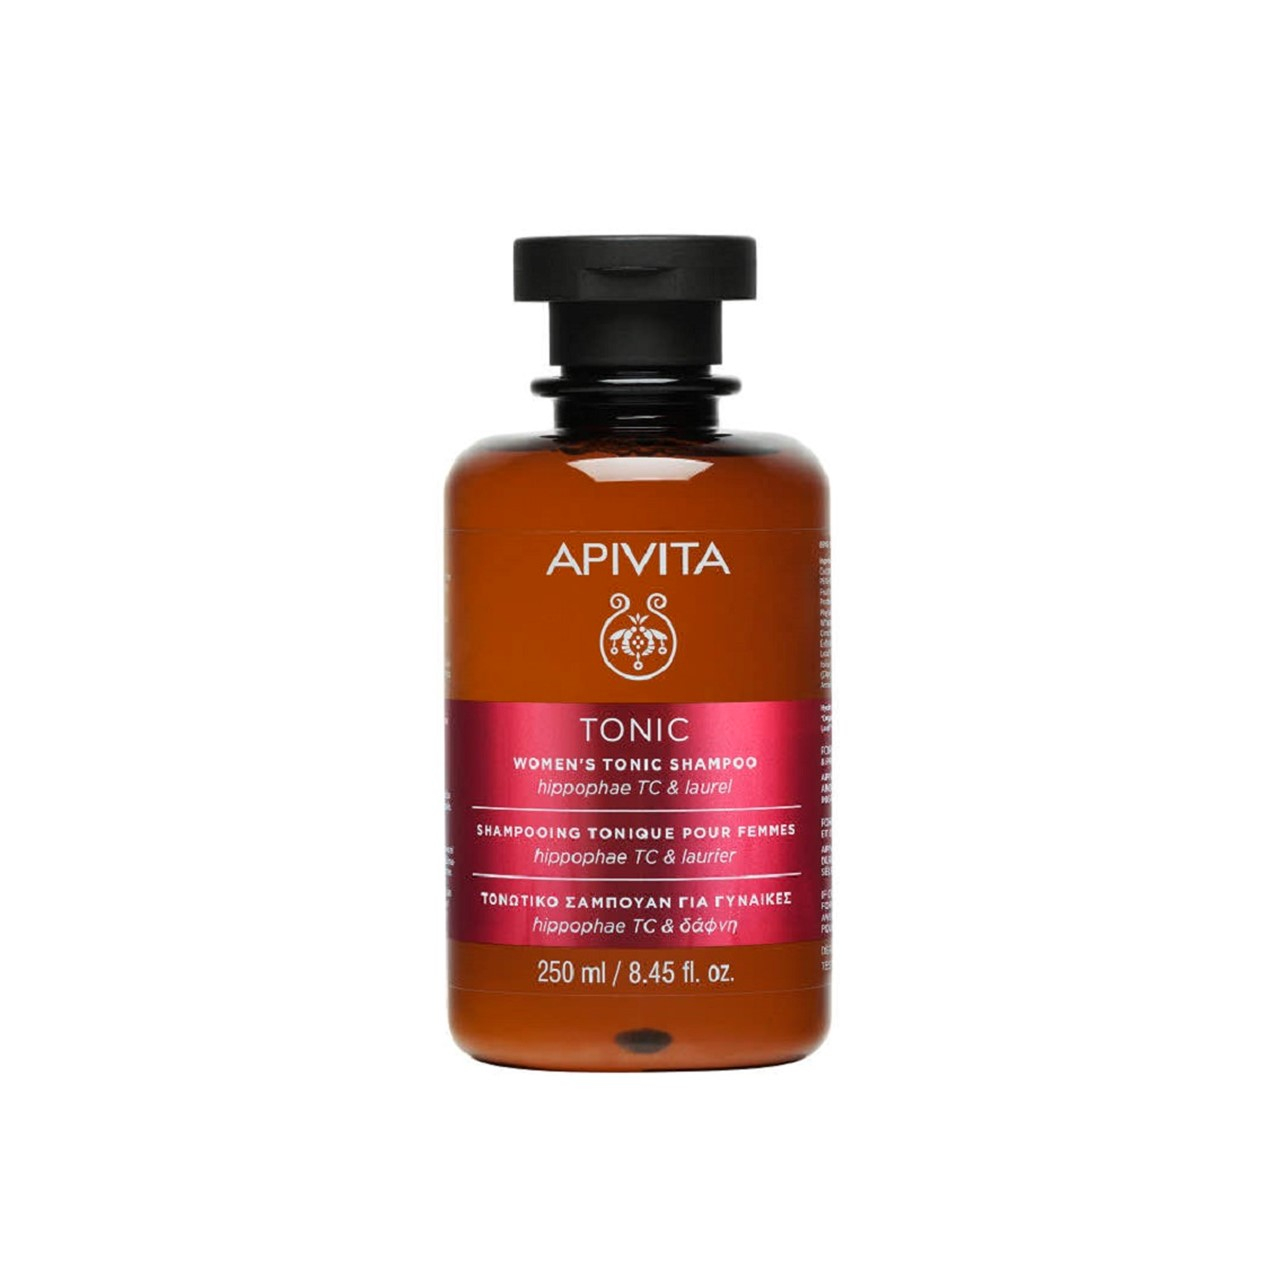 APIVITA Hair Care Women's Tonic Shampoo 250ml (8.45fl oz)